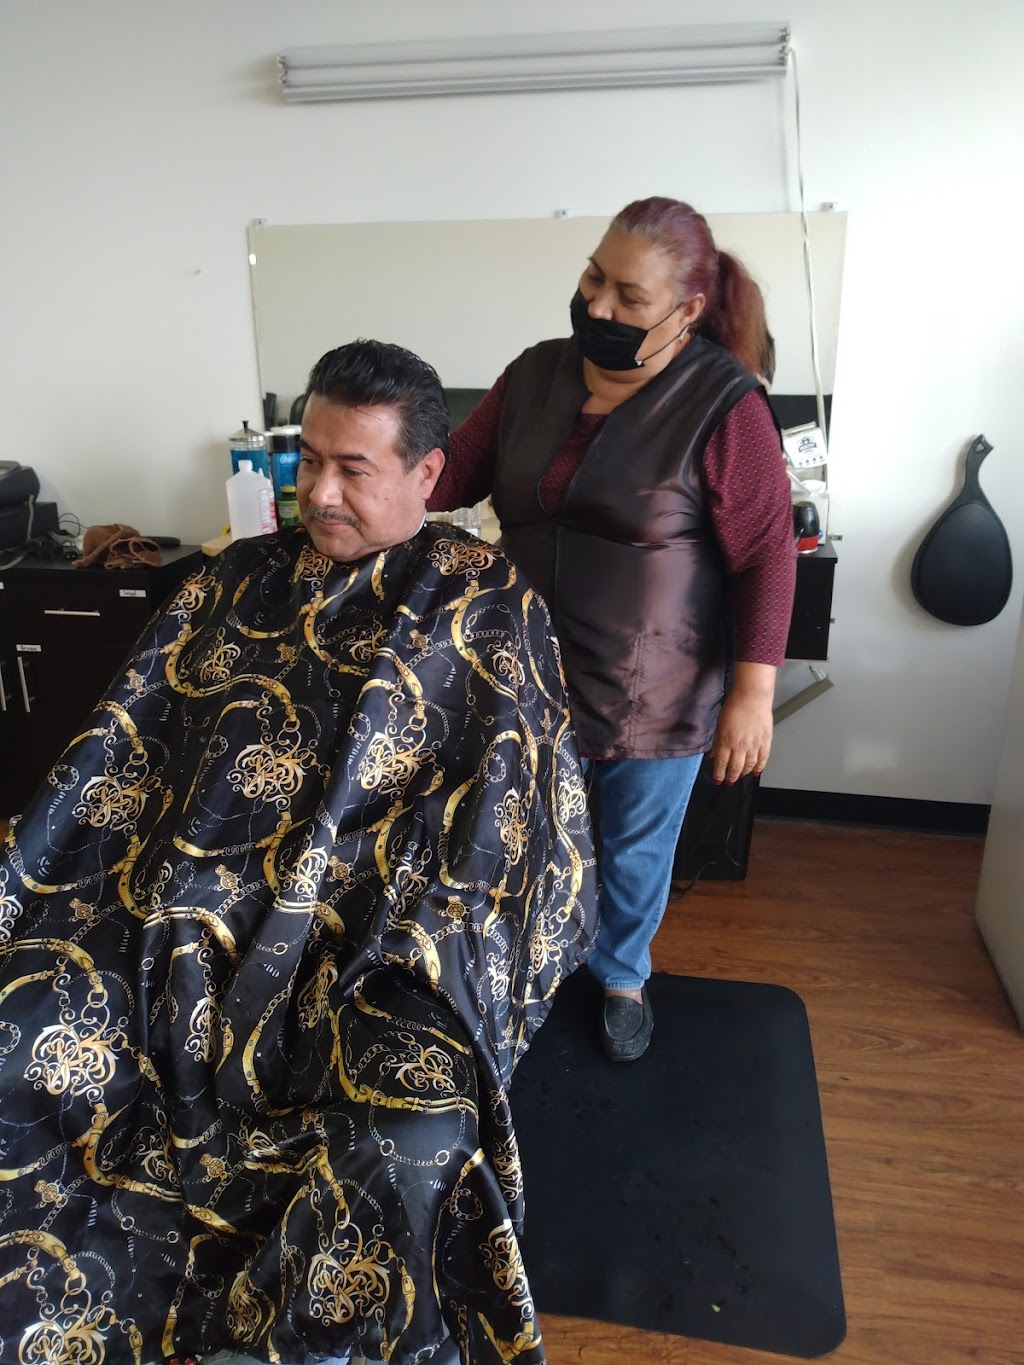 Guilles Barber Shop | 3686 Riverside Dr, Chino, CA 91710, USA | Phone: (909) 591-1199